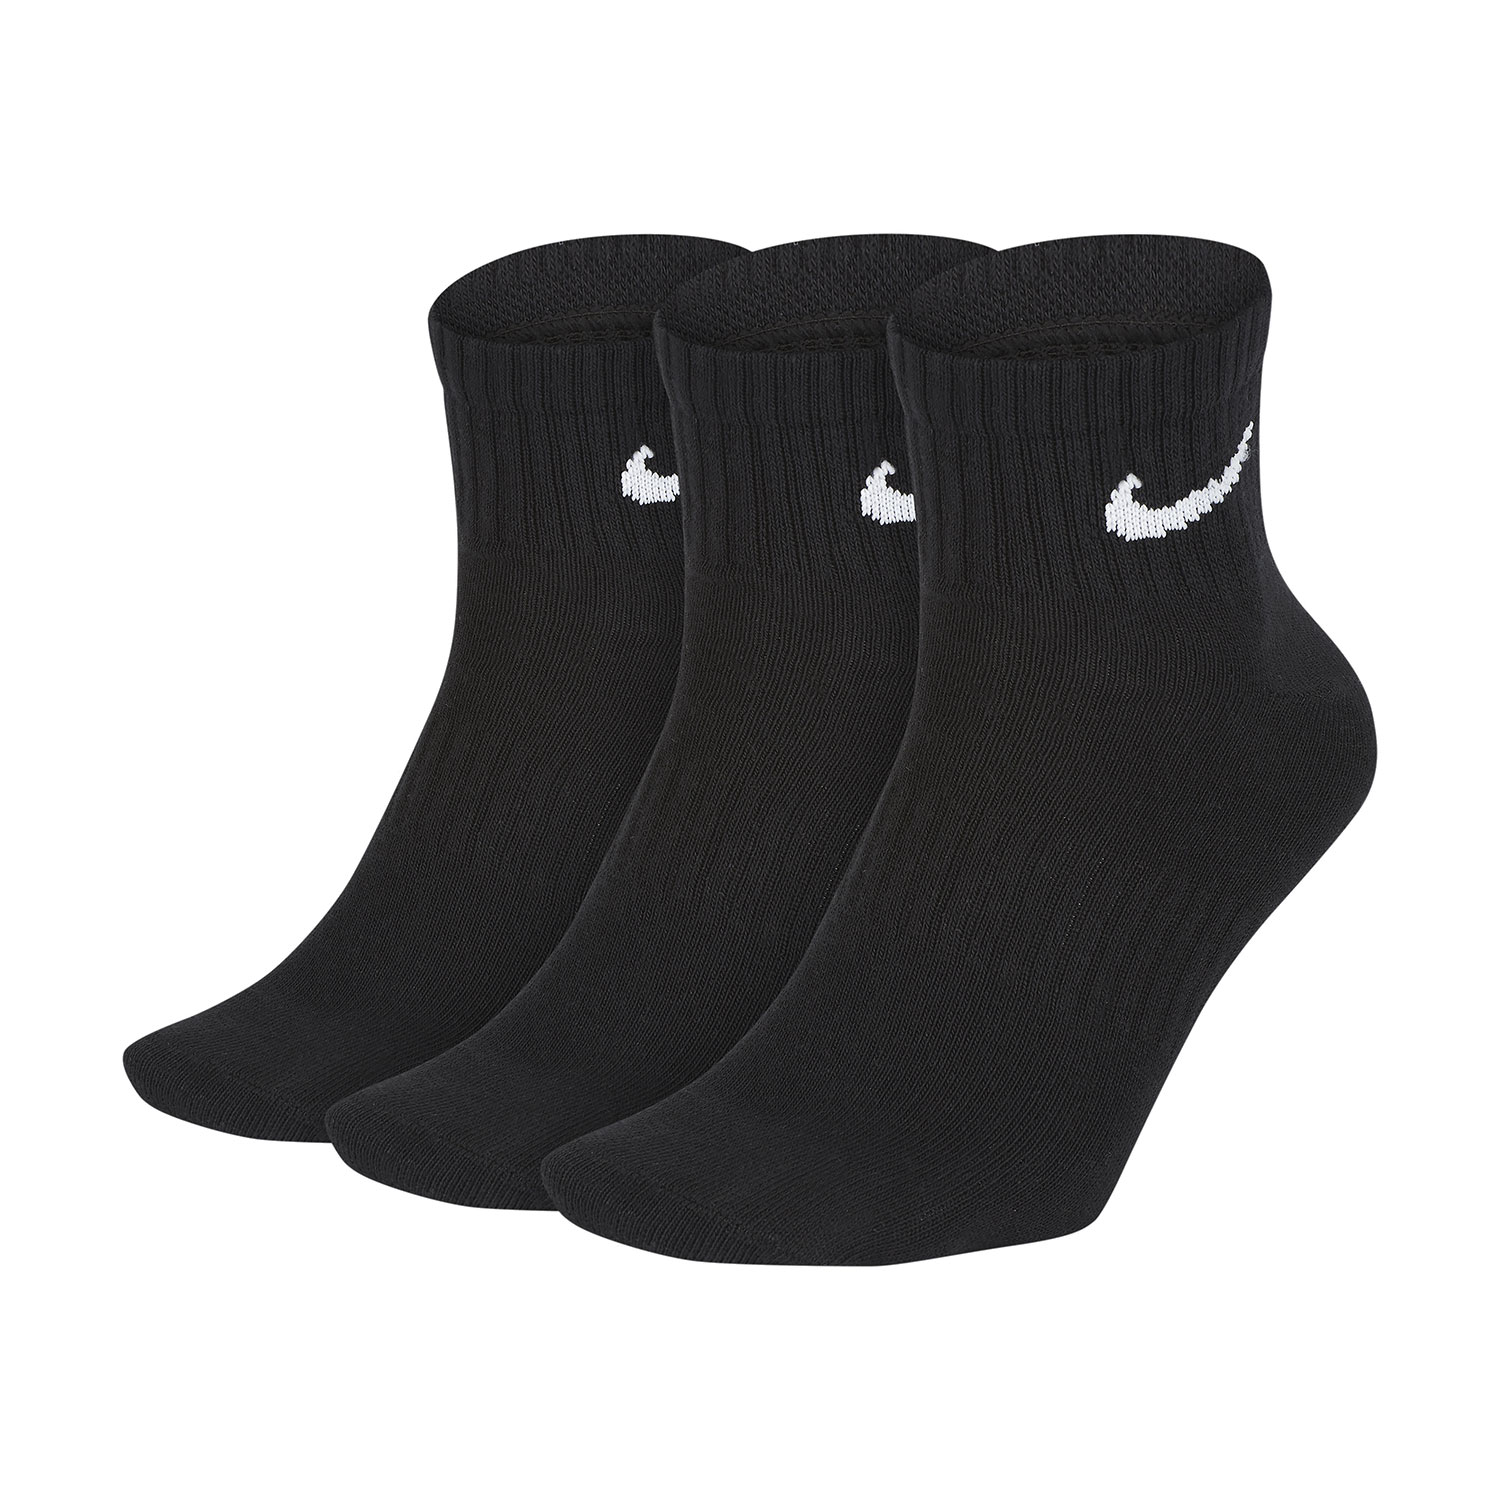 Nike Everyday Lightweight x 3 Running Socks Black/White